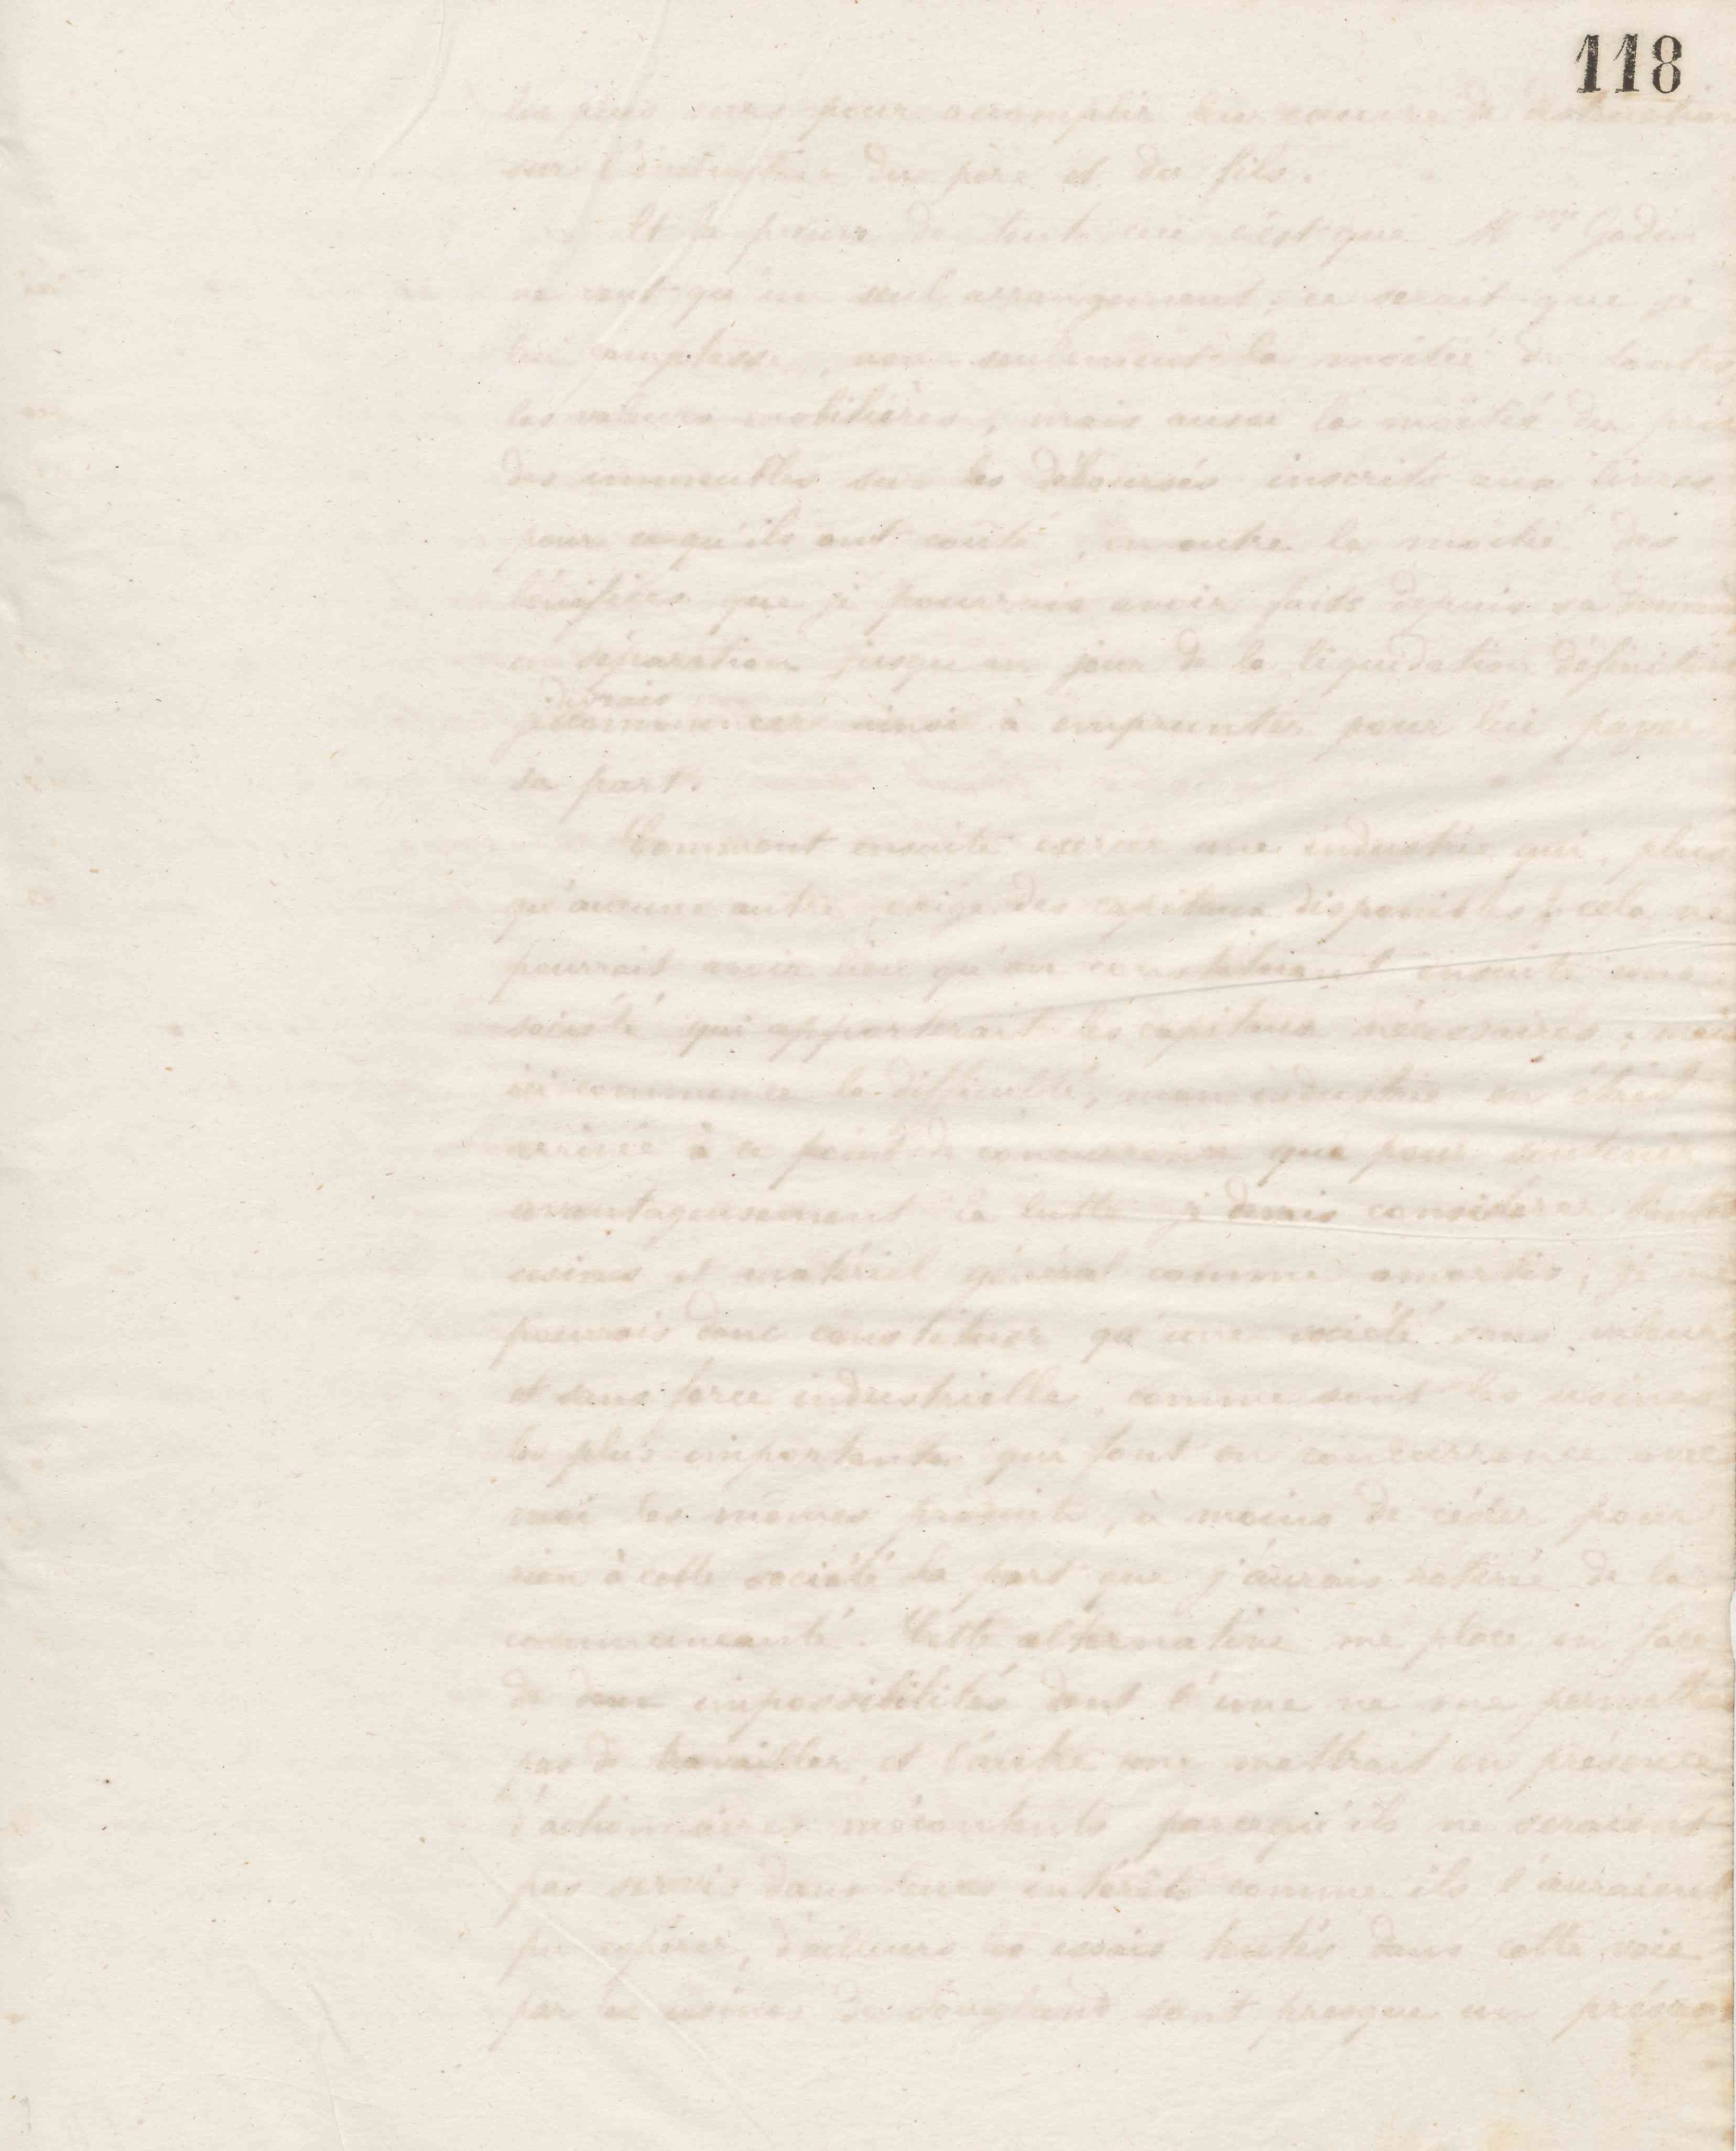 Jean-Baptiste André Godin à Albert Dauphin, vers le 12 août 1865